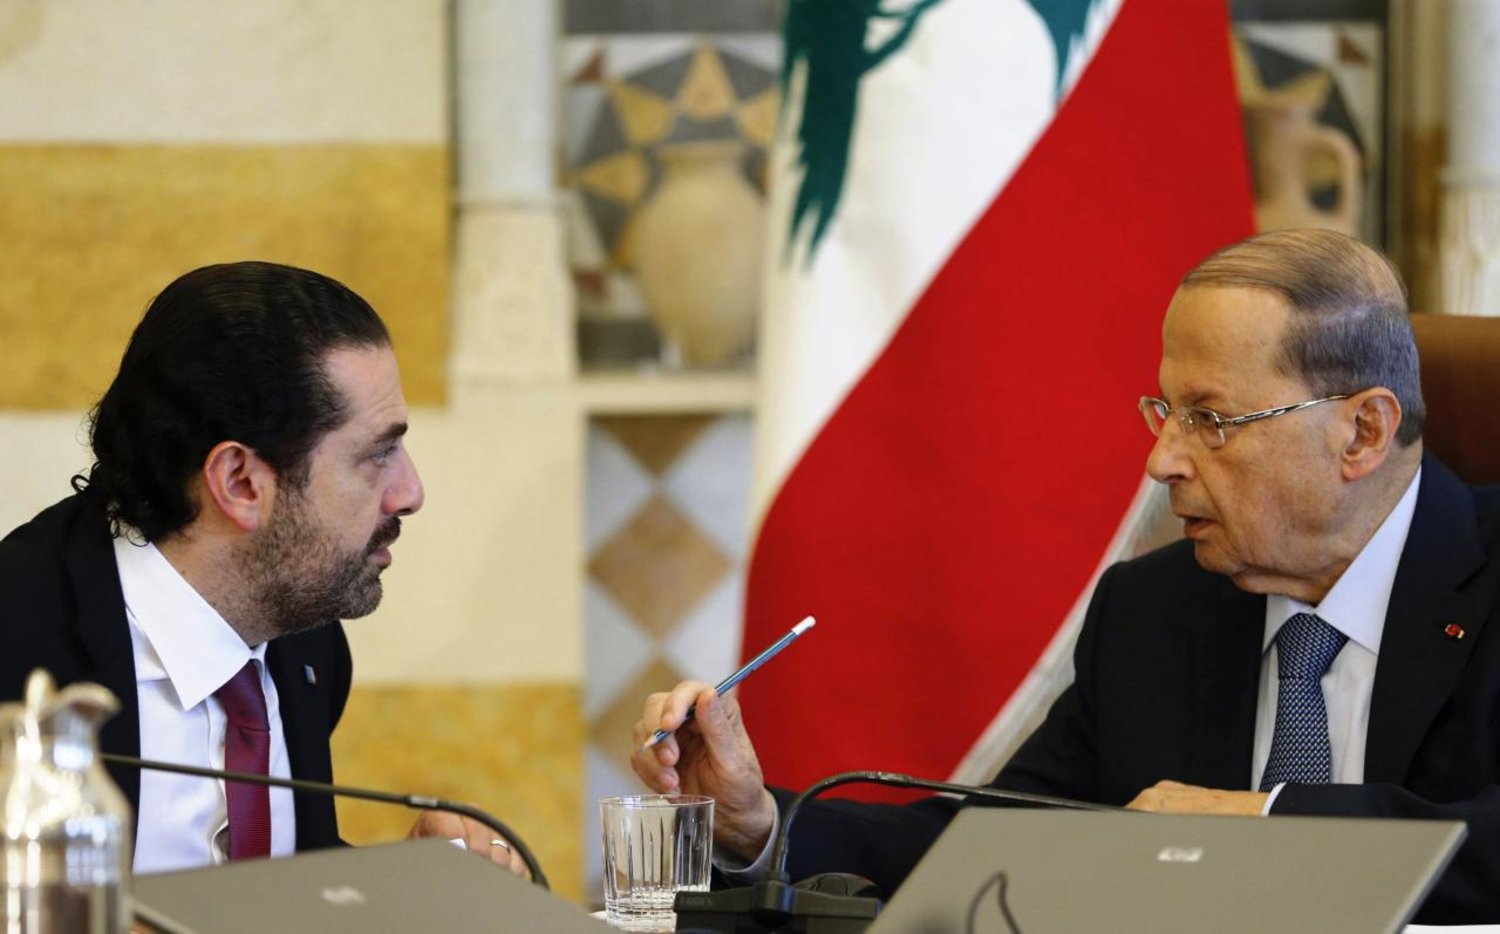 Lebanon’s President Michel Aoun talks to Prime Minister Saad al-Hariri during the cabinet meeting in Baabda near Beirut, Lebanon December 5, 2017. REUTERS/Mohamed Azakir